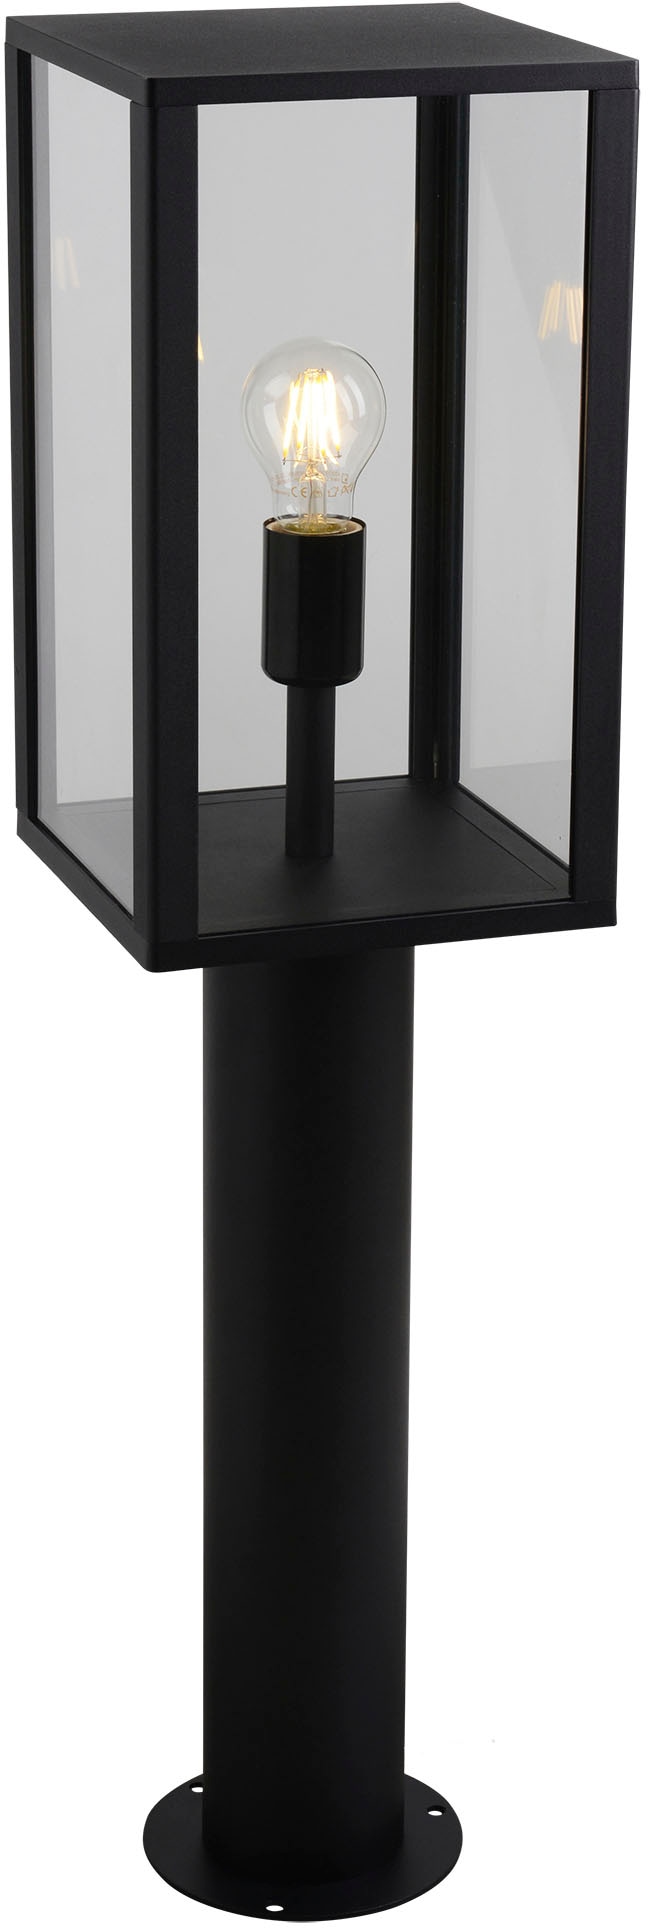 näve Außen-Stehlampe »AILA«, 1 flammig-flammig, Sockelleuchte, eckig, exkl. 1x E27 60W, Glas, Aluminium, schwarz